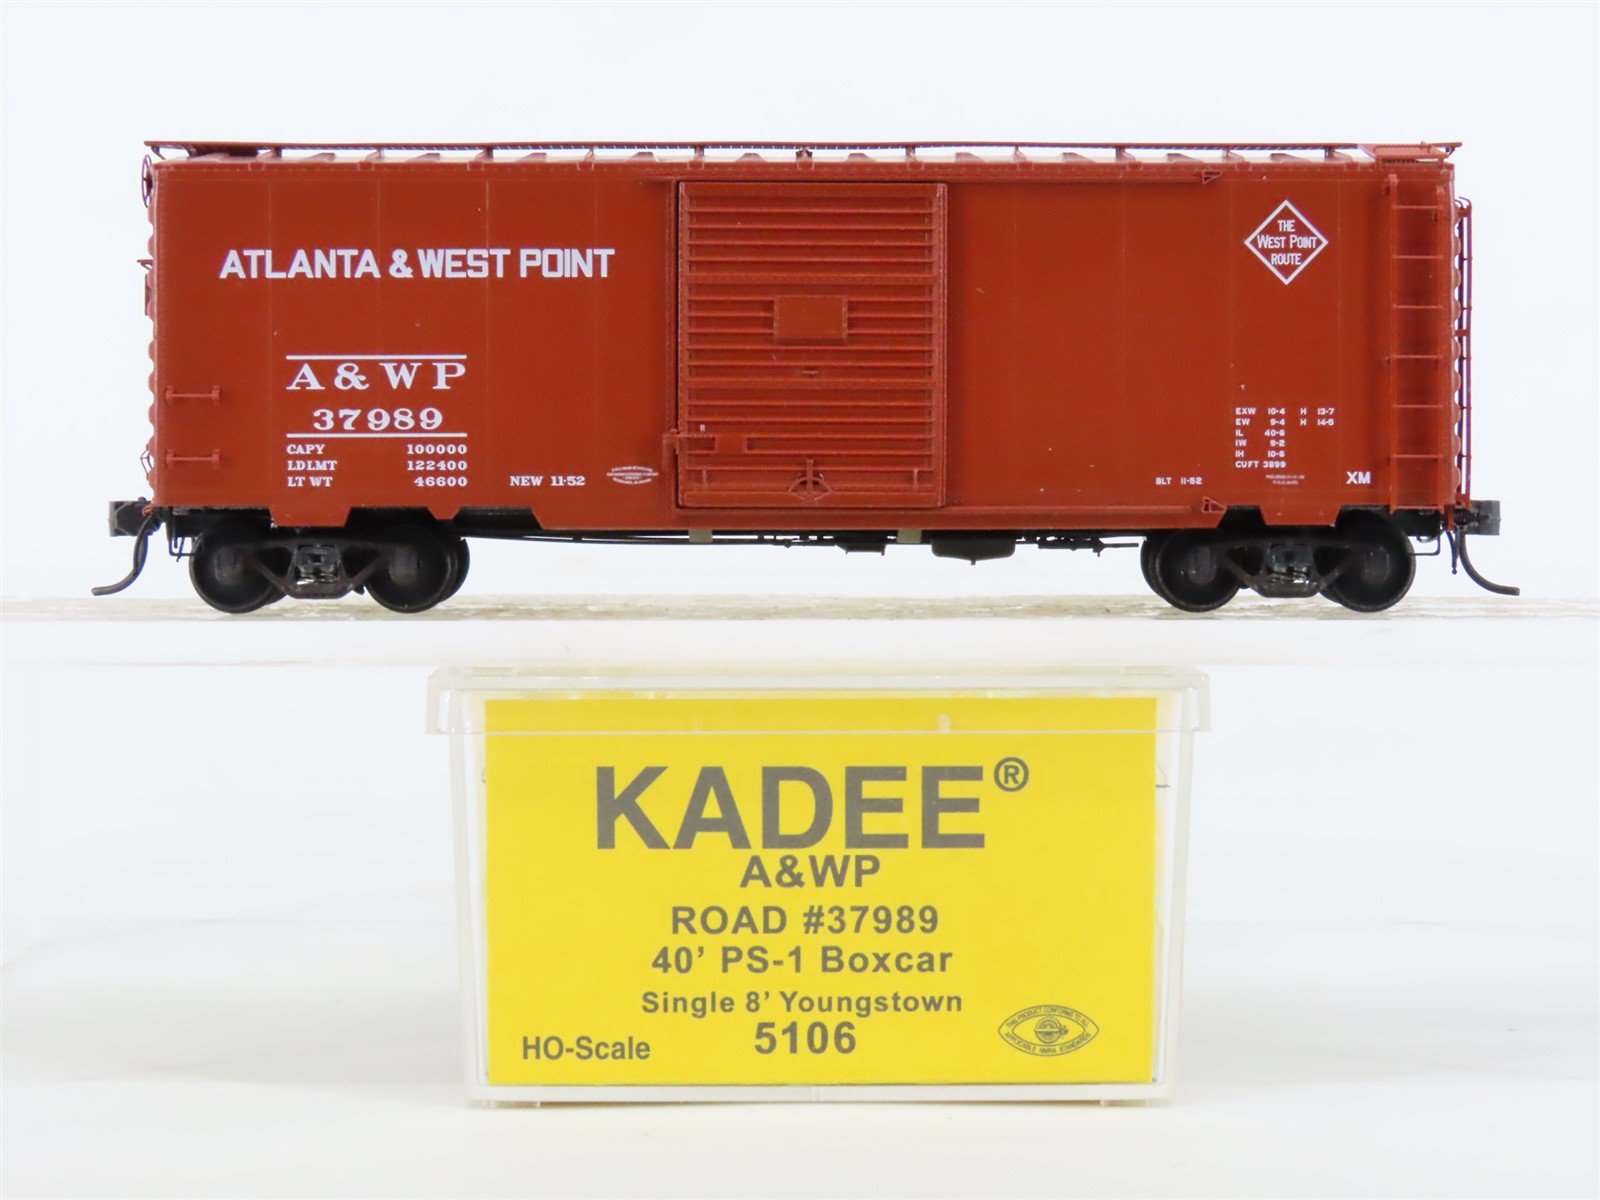 HO Scale Kadee #5106 A&WP Atlanta & West Point 40' PS-1 Box Car #37989